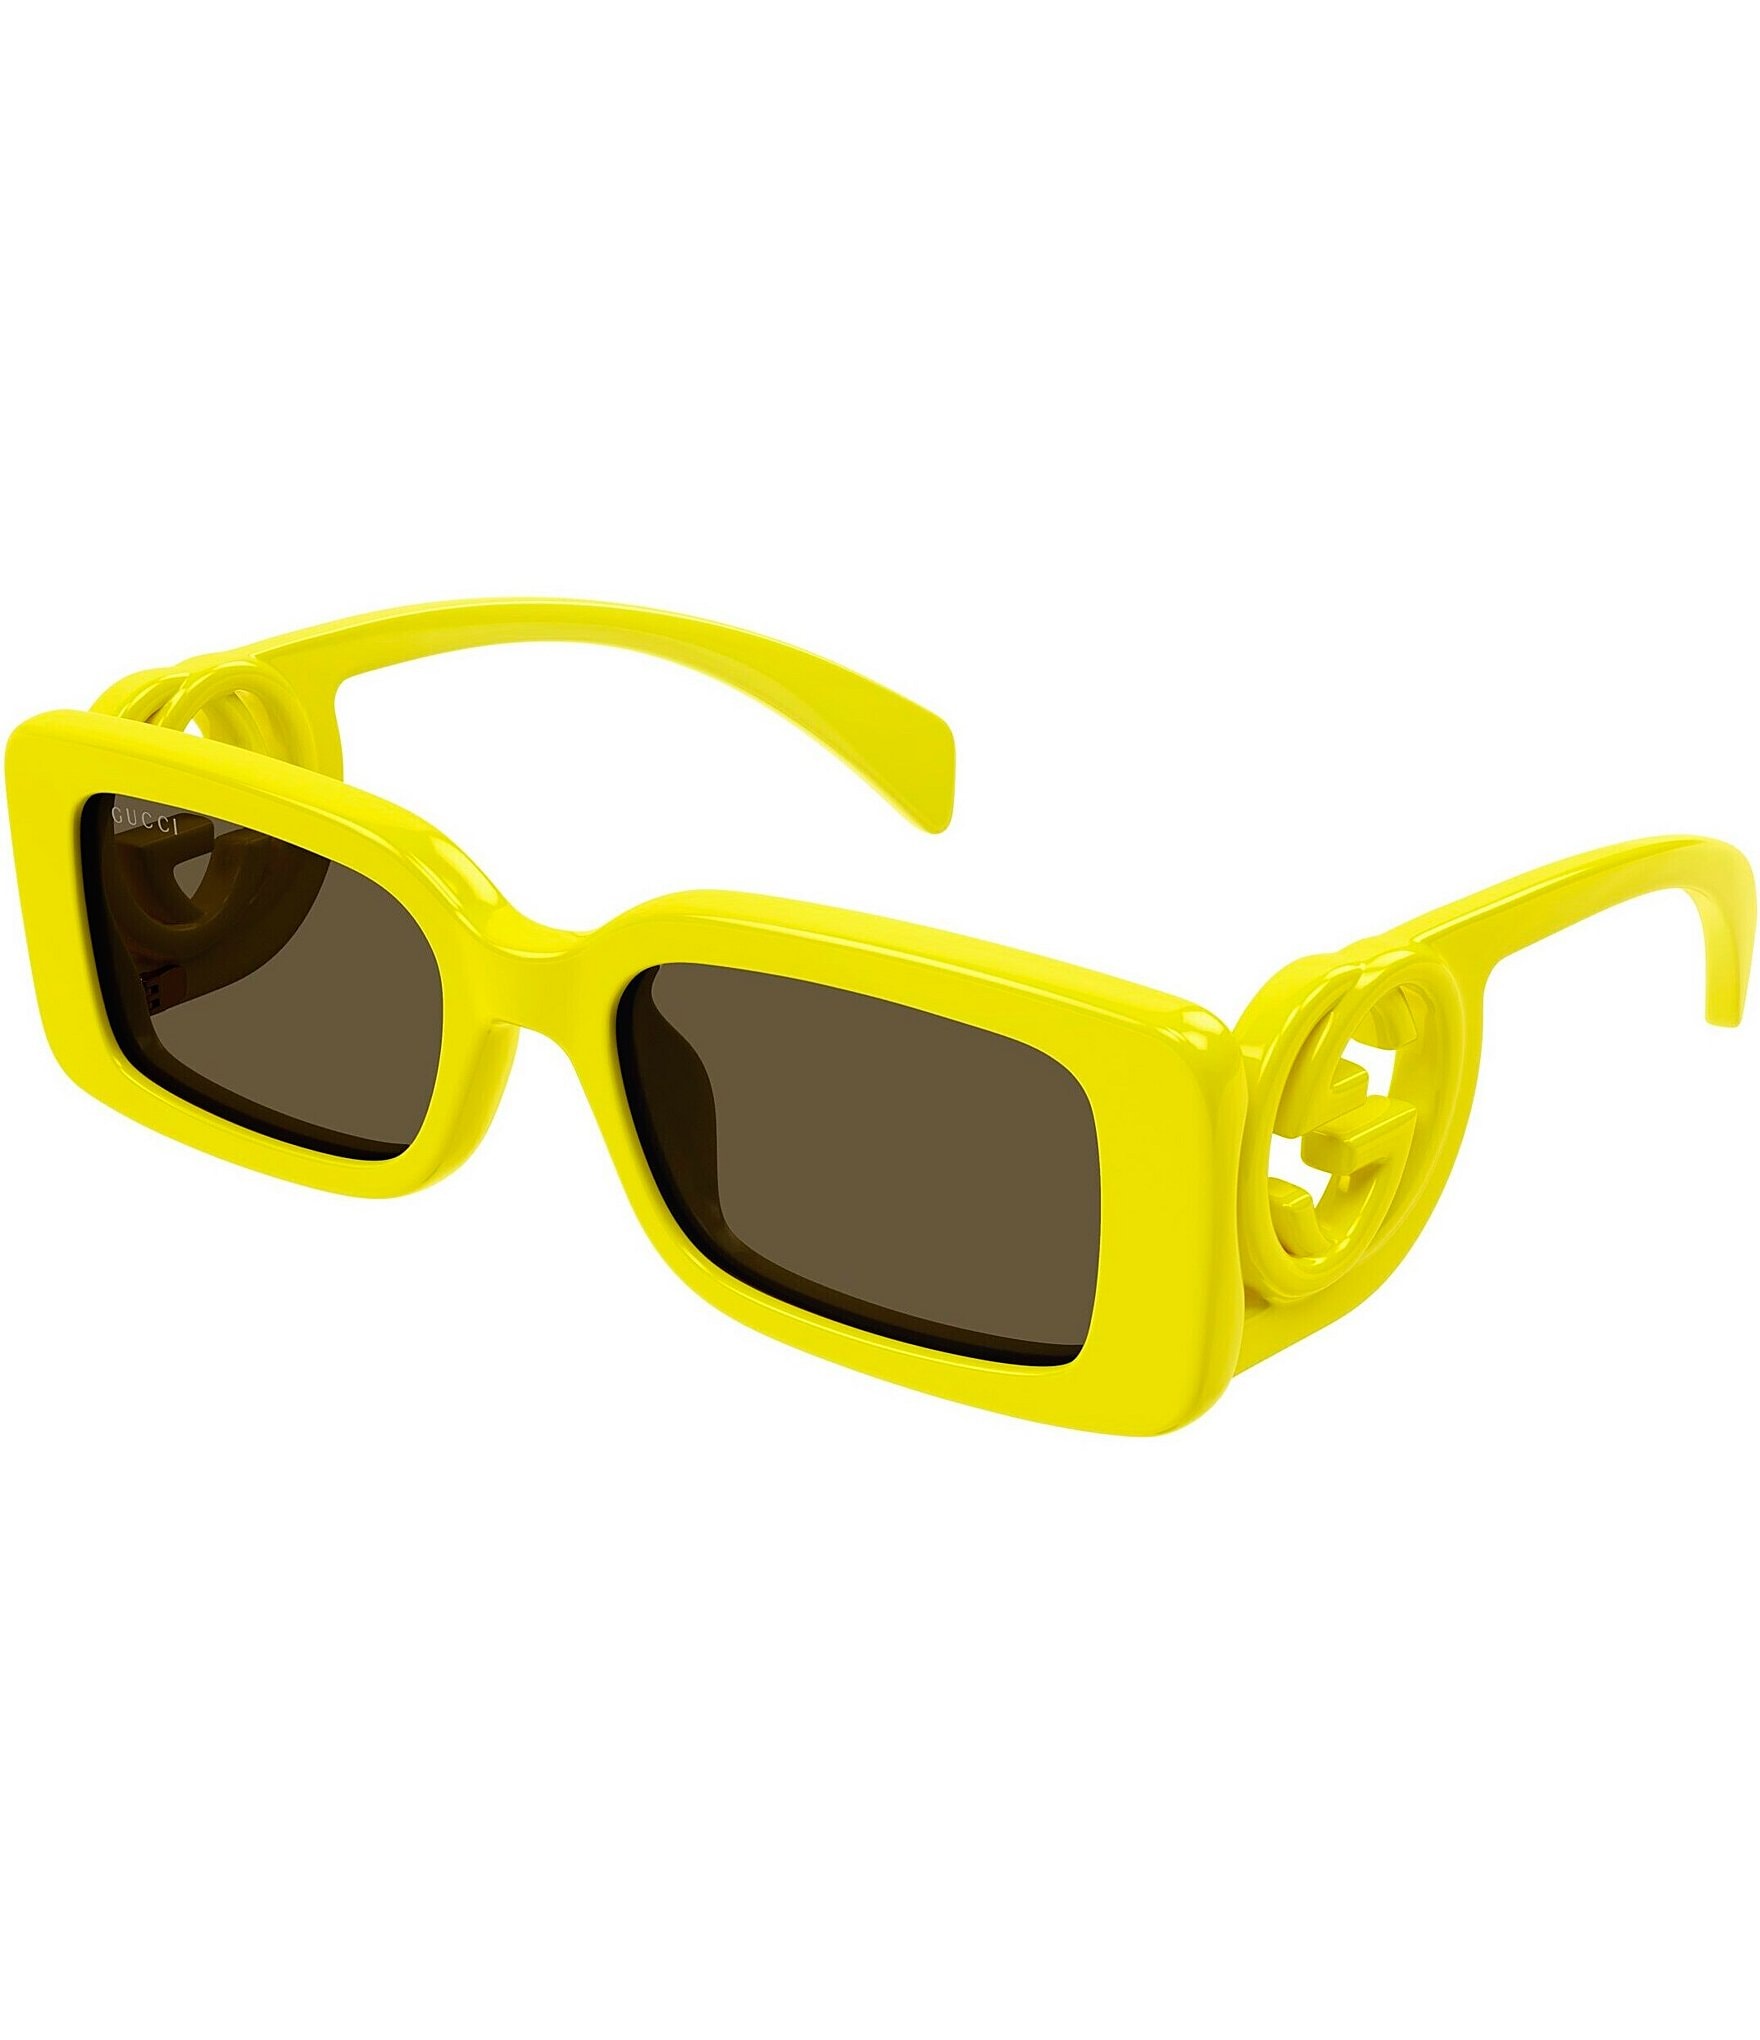 Top more than 244 gucci italy design sunglasses super hot